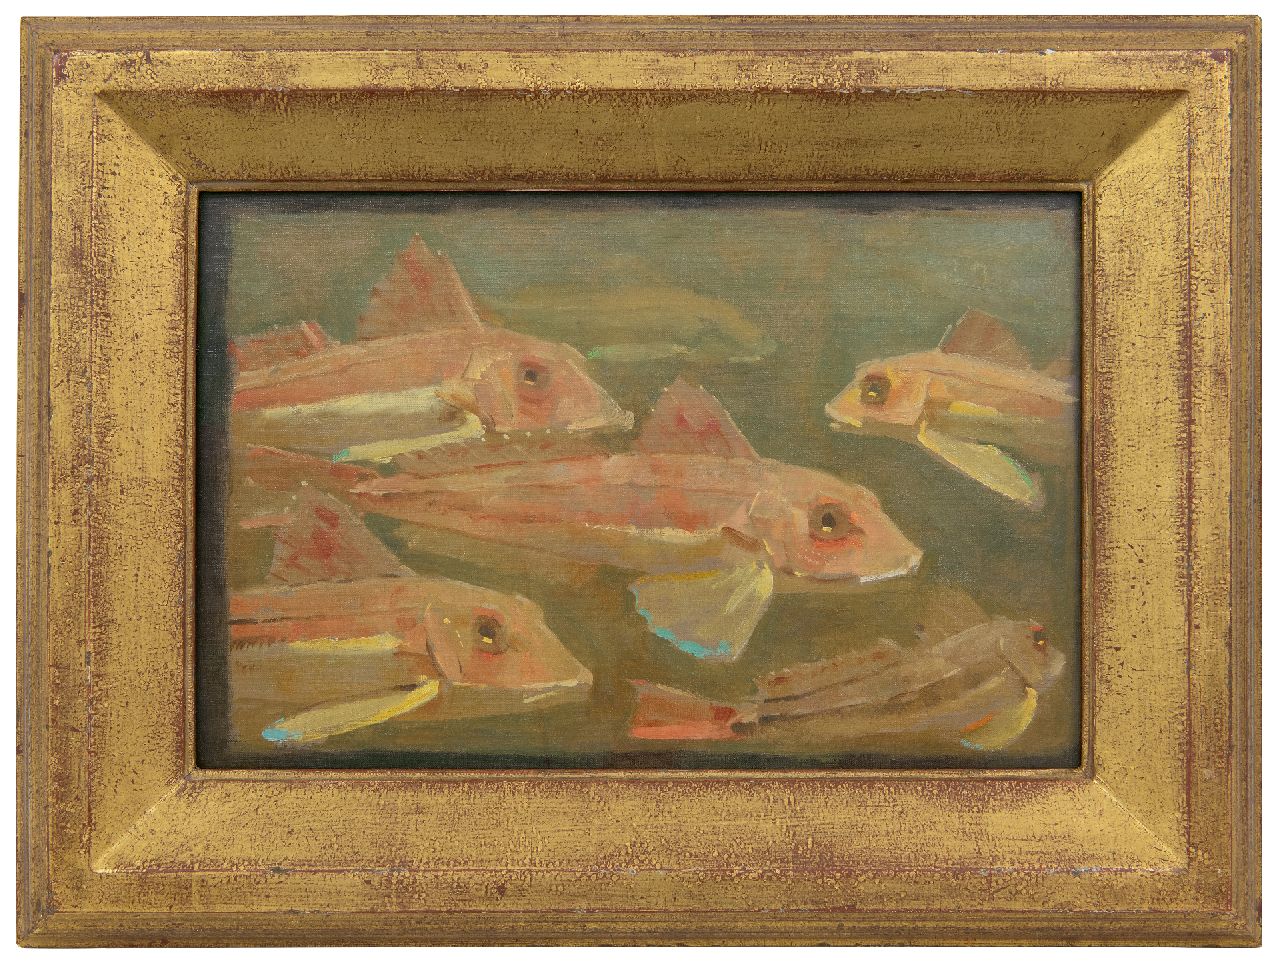 Dijsselhof G.W.  | Gerrit Willem Dijsselhof | Paintings offered for sale | Gurnards in an aquarium, oil on canvas 26.2 x 38.2 cm